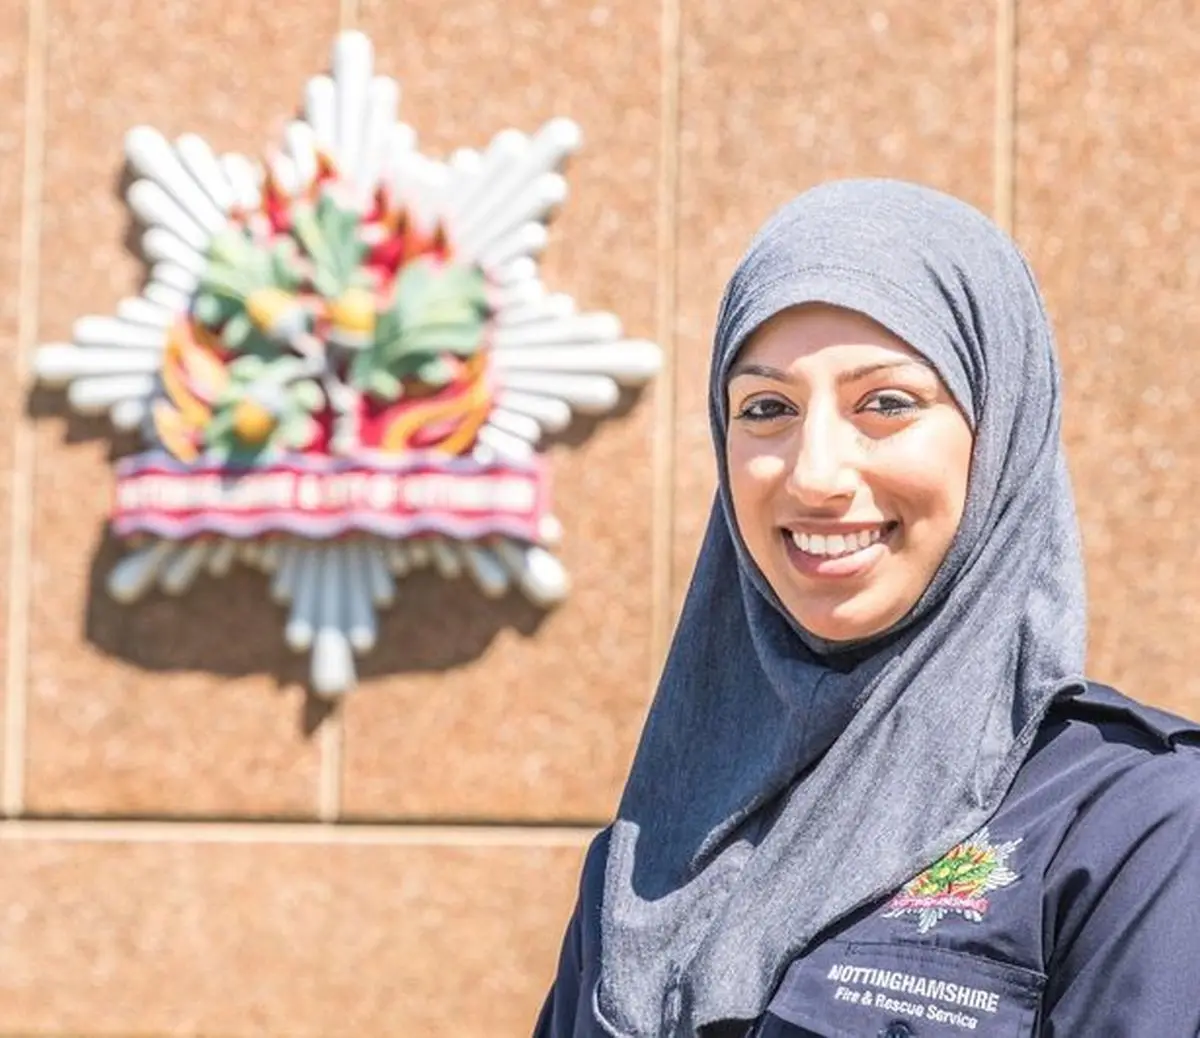 ناتینگهام انگلیس  | اولین آتش نشان زن مسلمان در انگلیس شروع به کار کرد